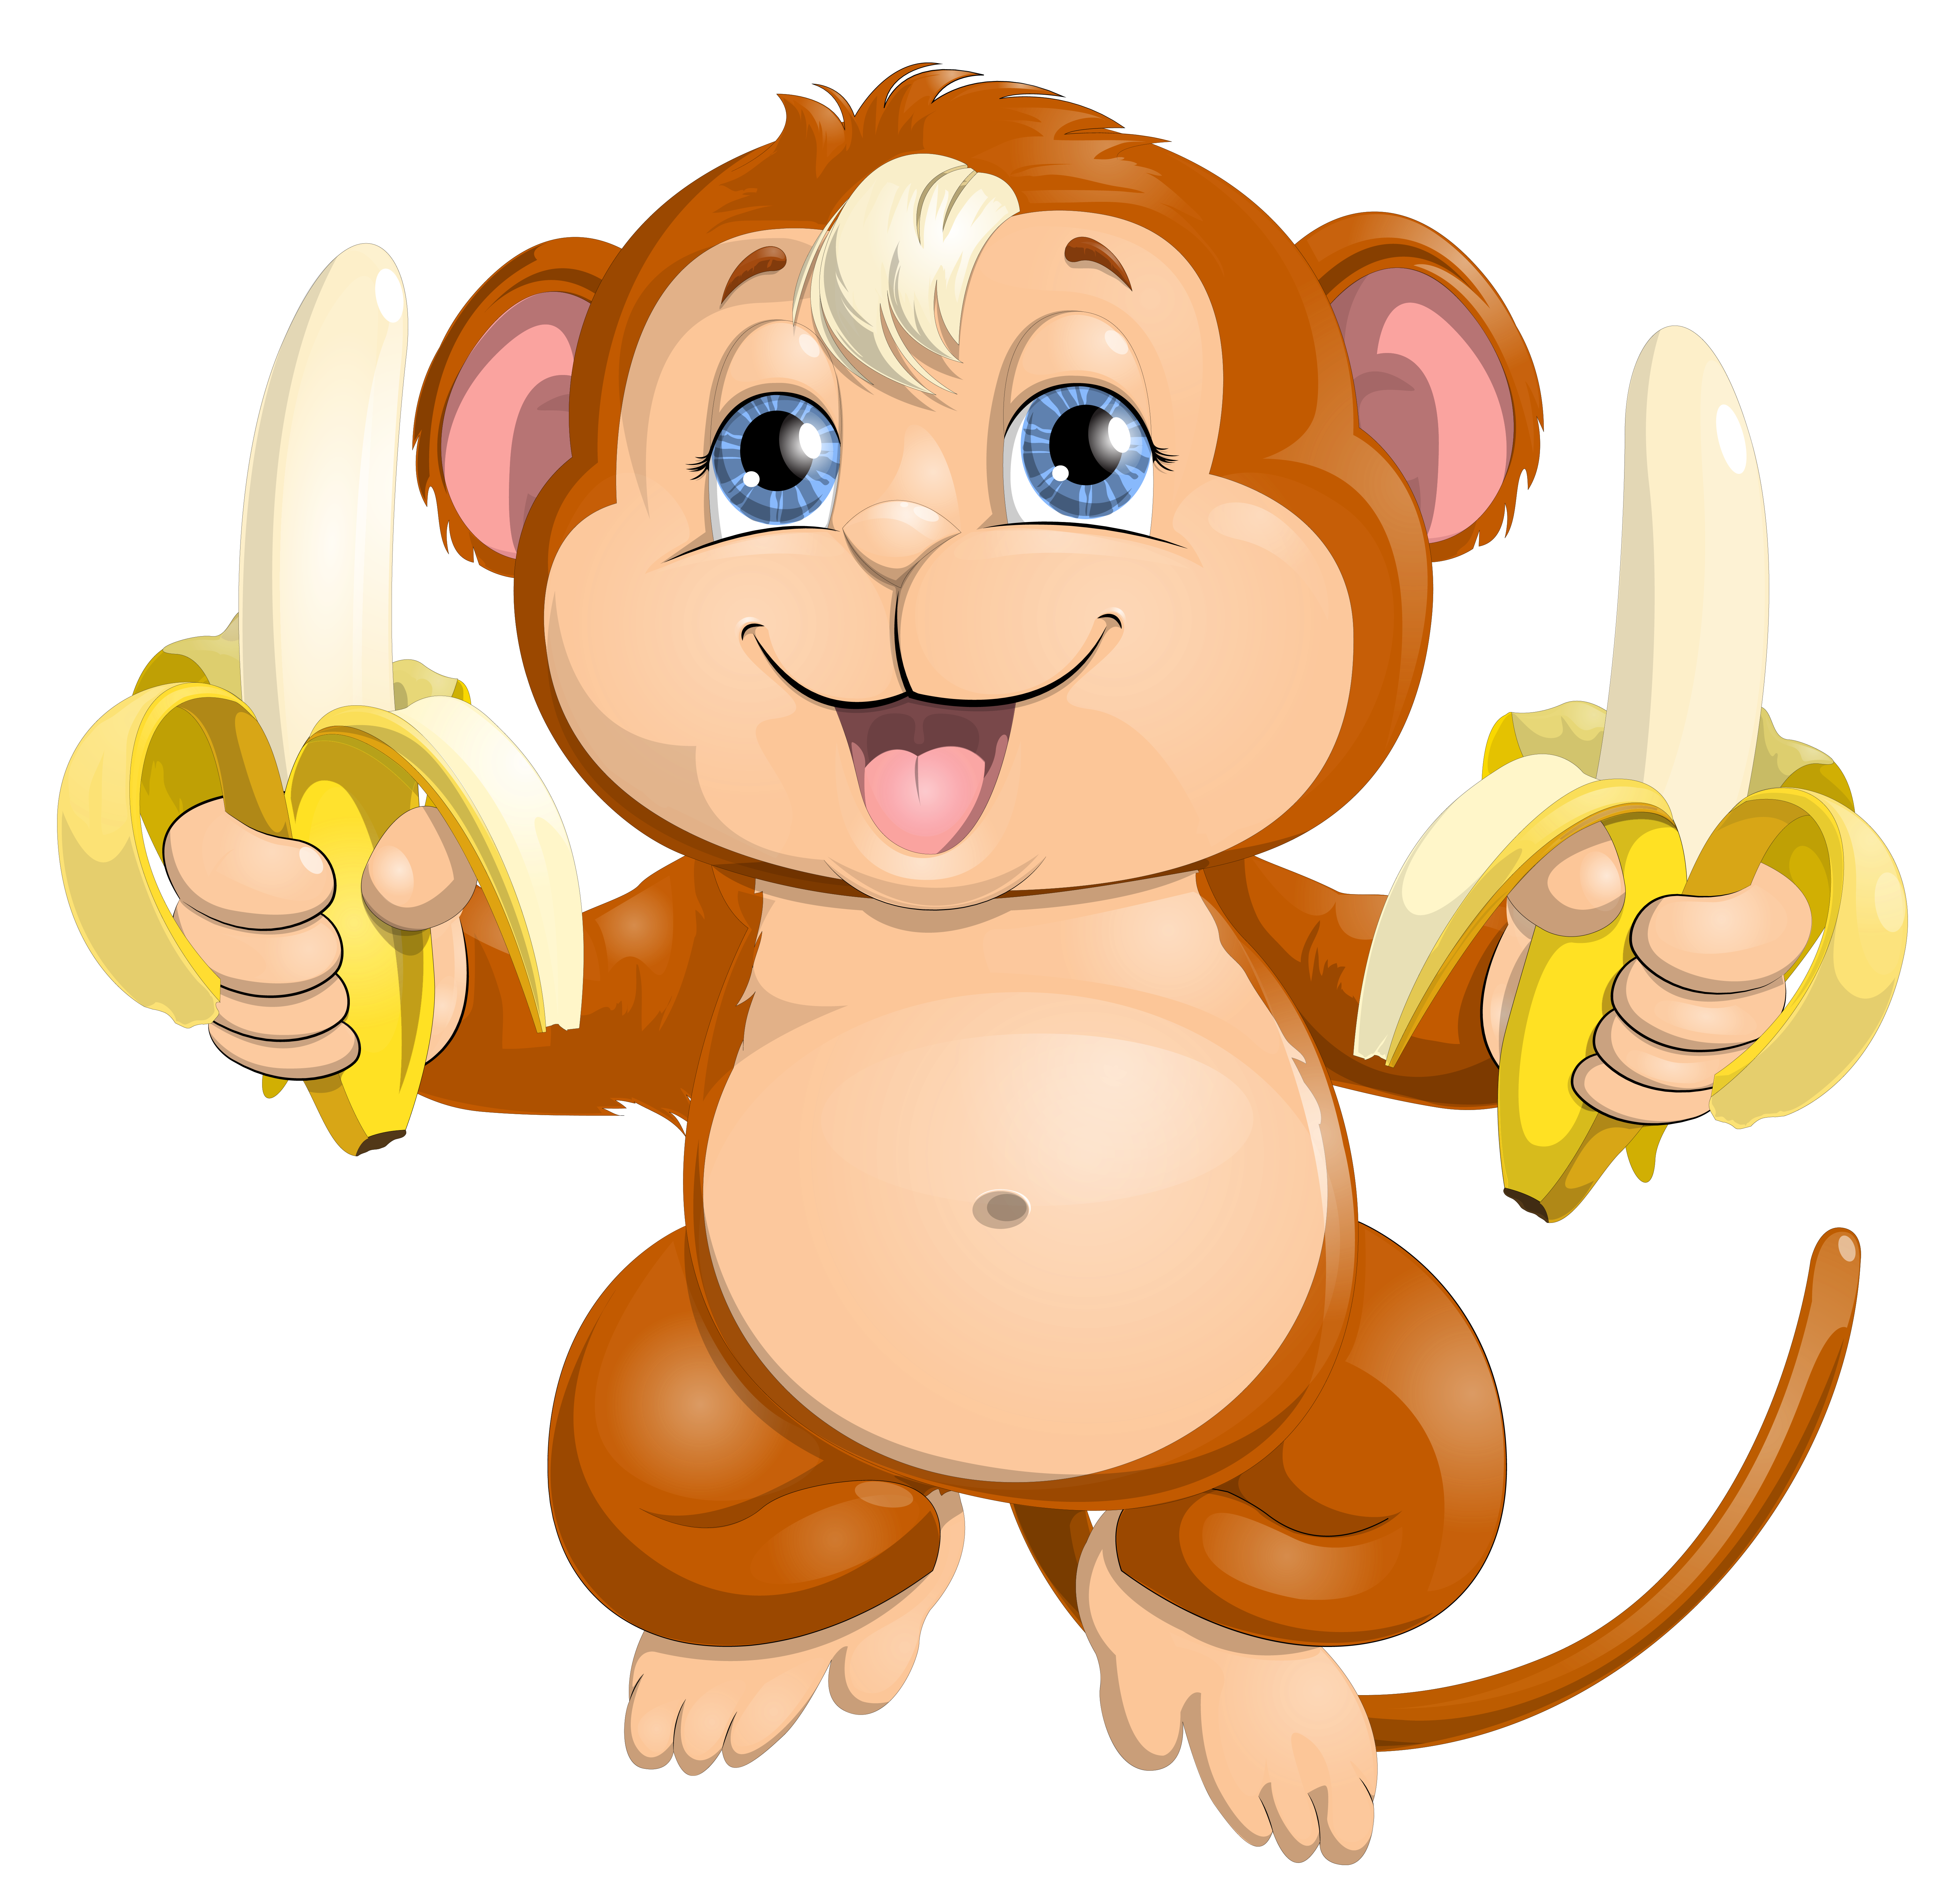  Monkey with Bananas